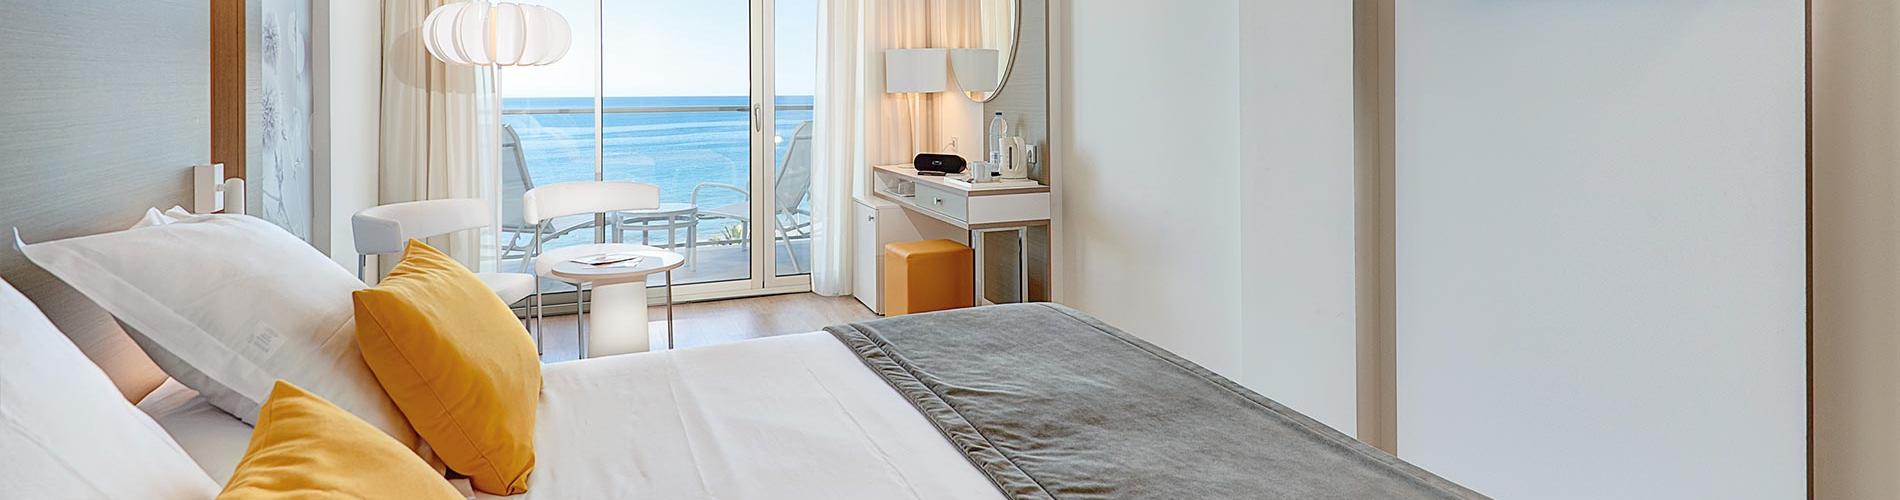 Rooms Protur Playa Cala Millor Hotel, majorca